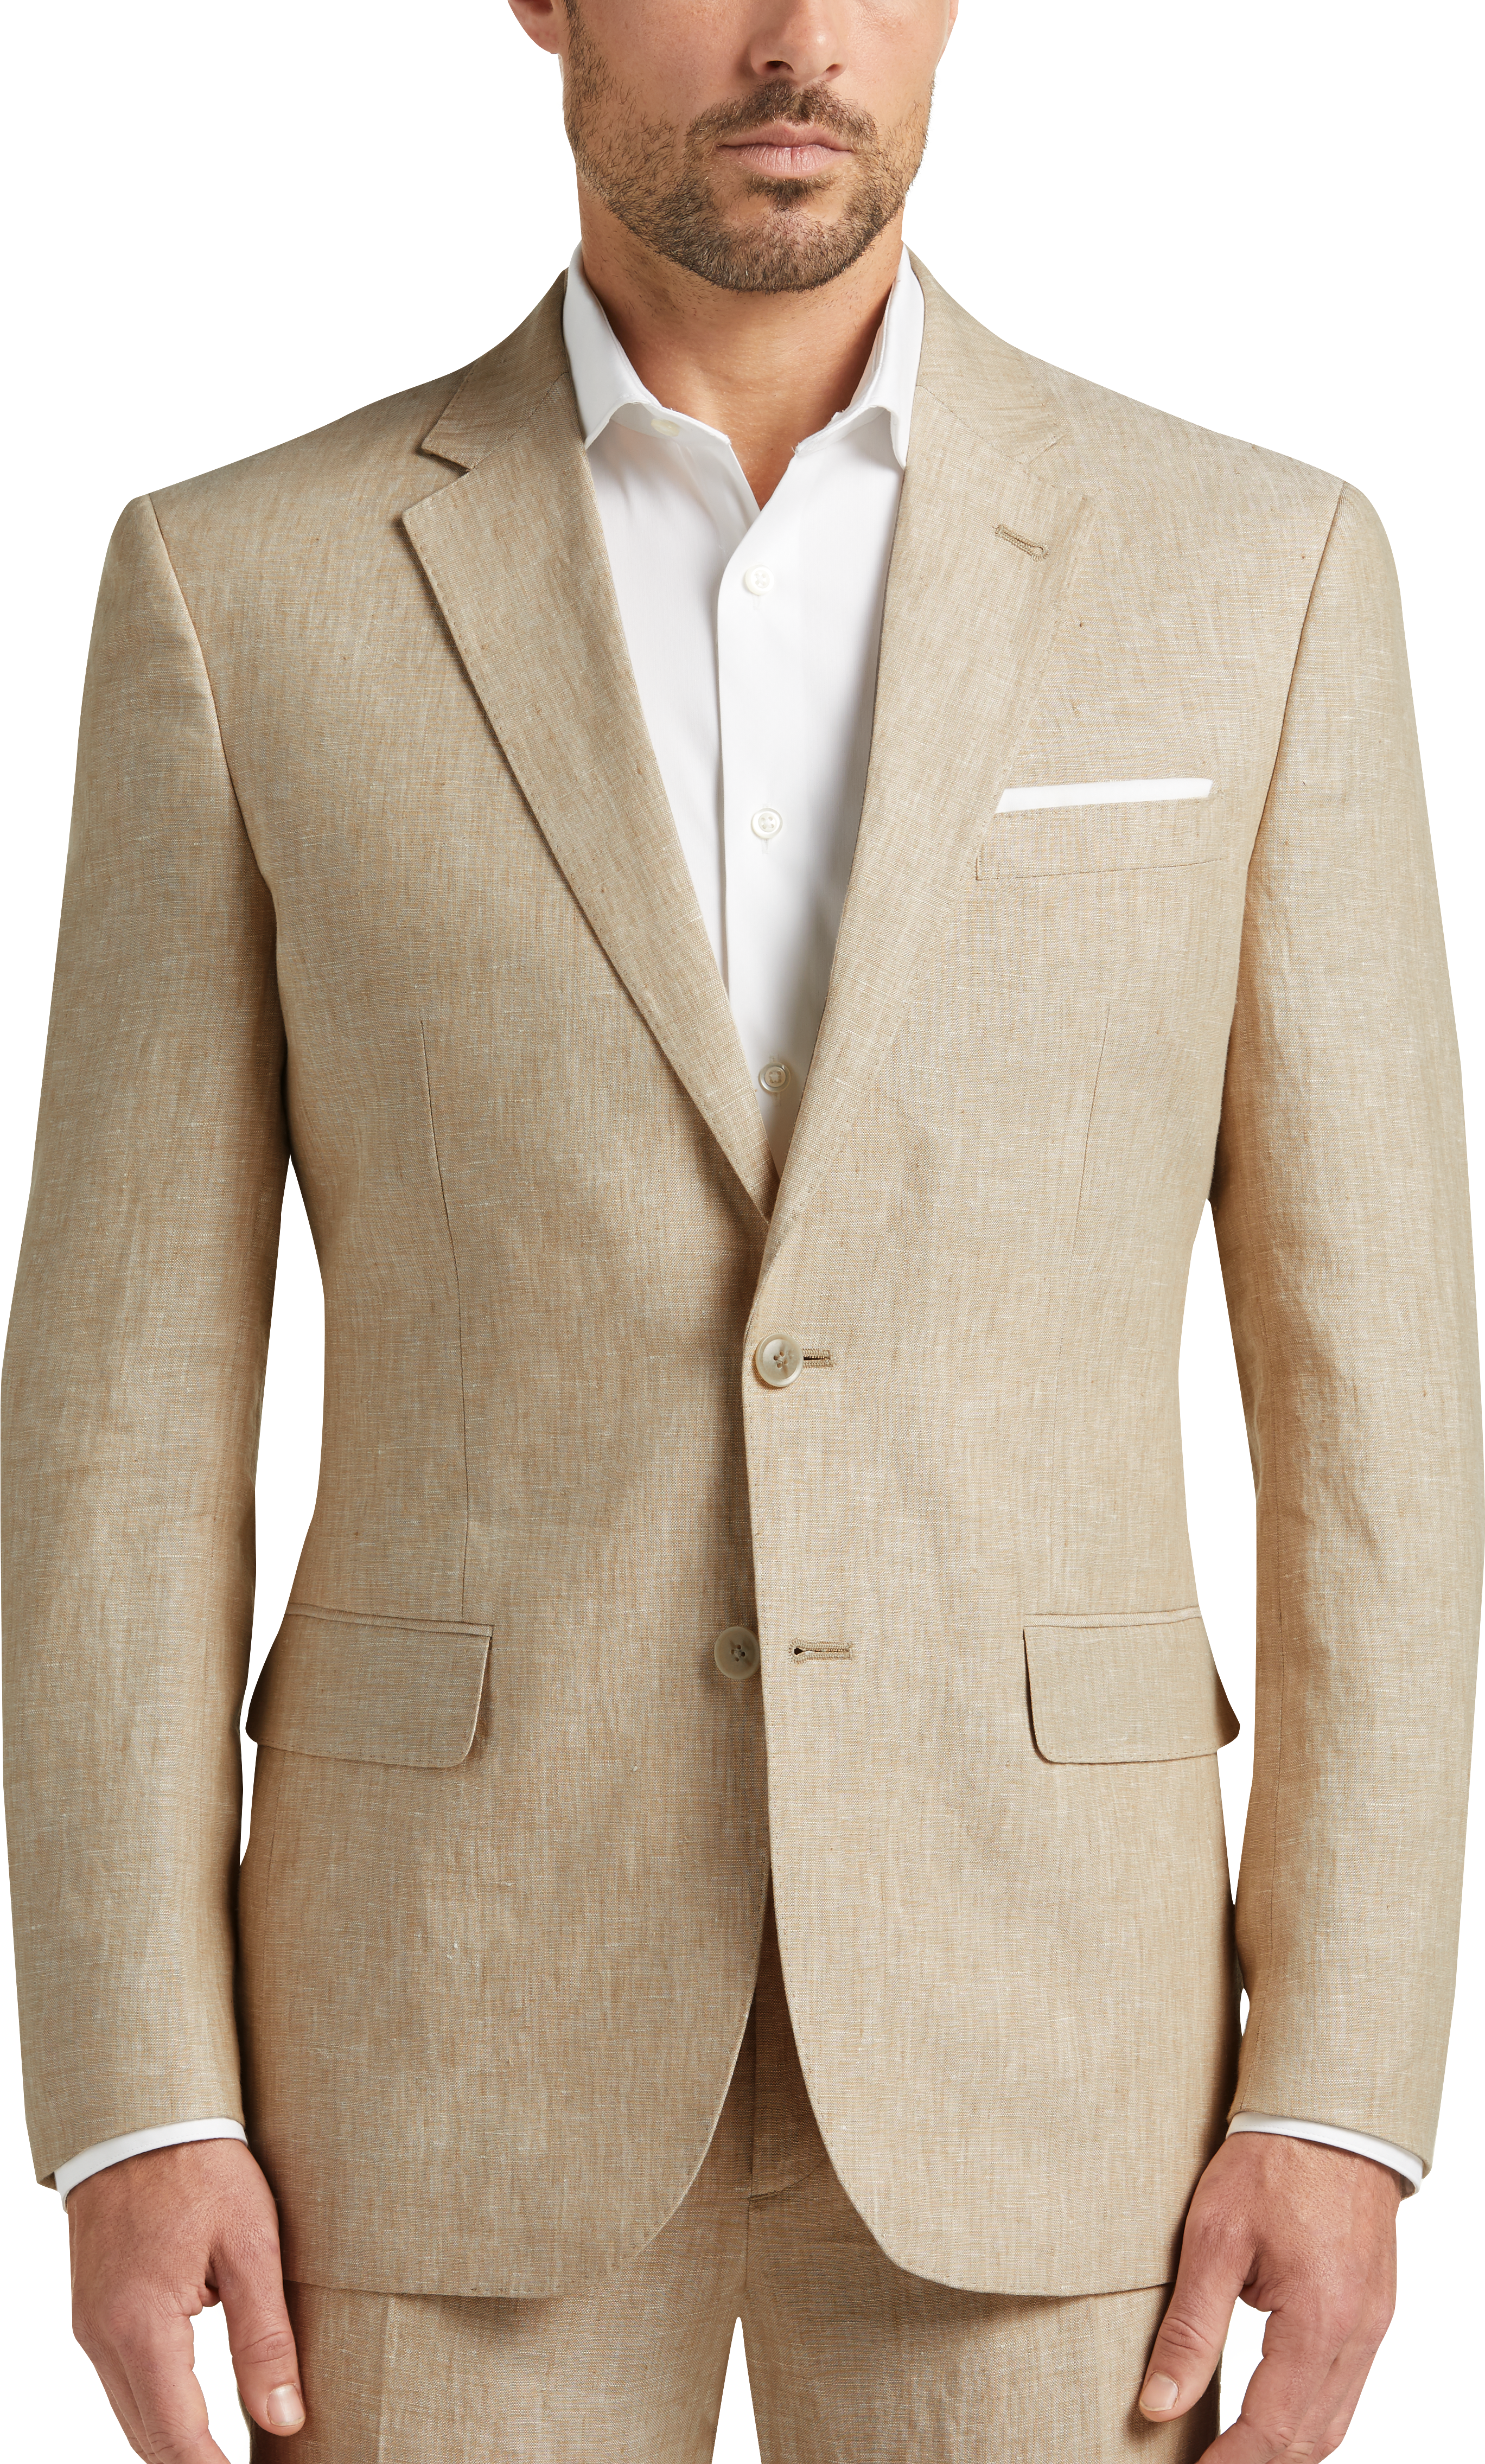 JOE Joseph Abboud Linen Slim Fit Suit Separates Coat, Tan